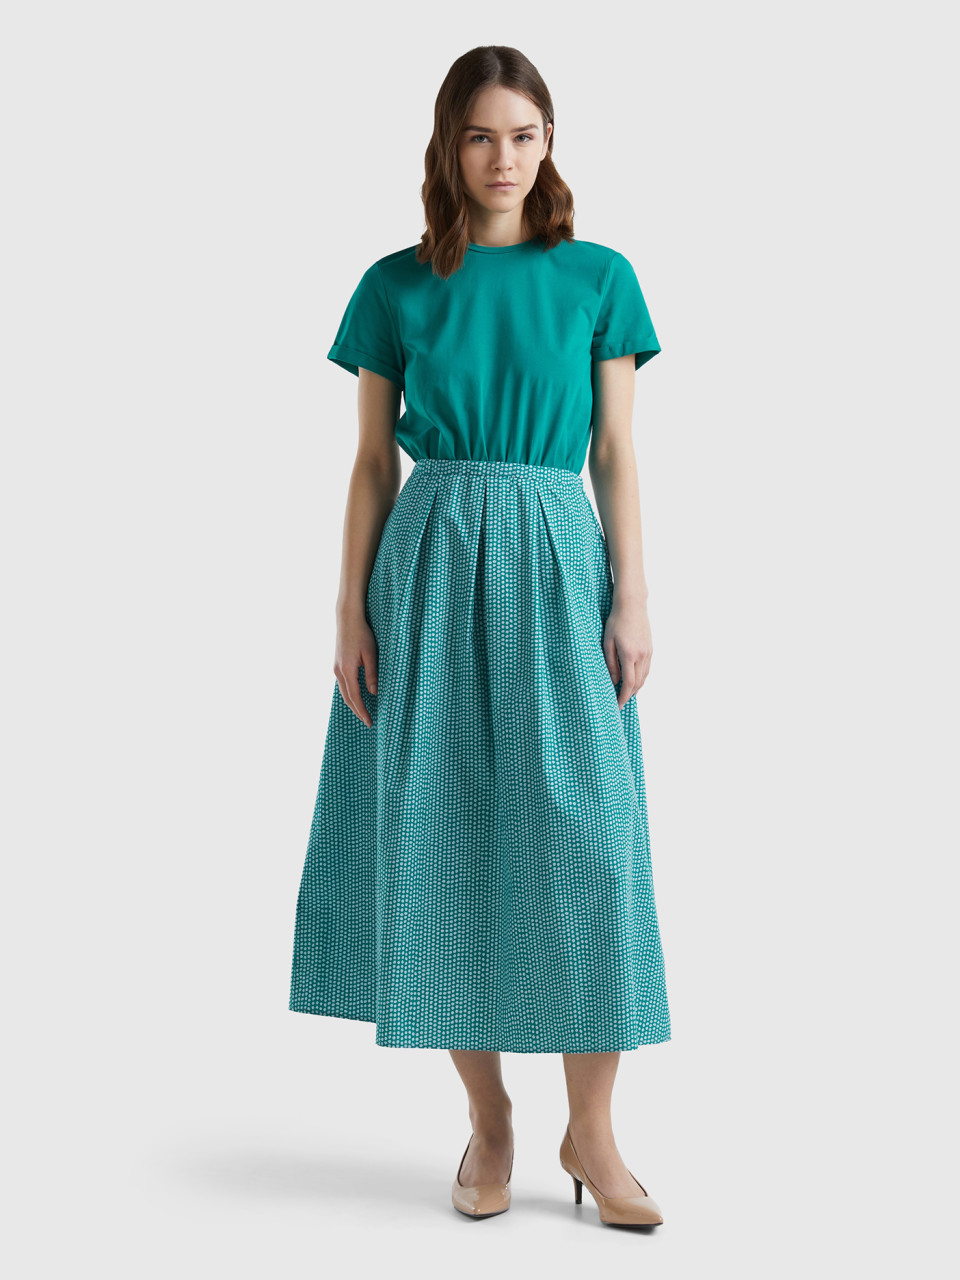 Benetton, Long Dress With Printed Skirt, Teal, Women